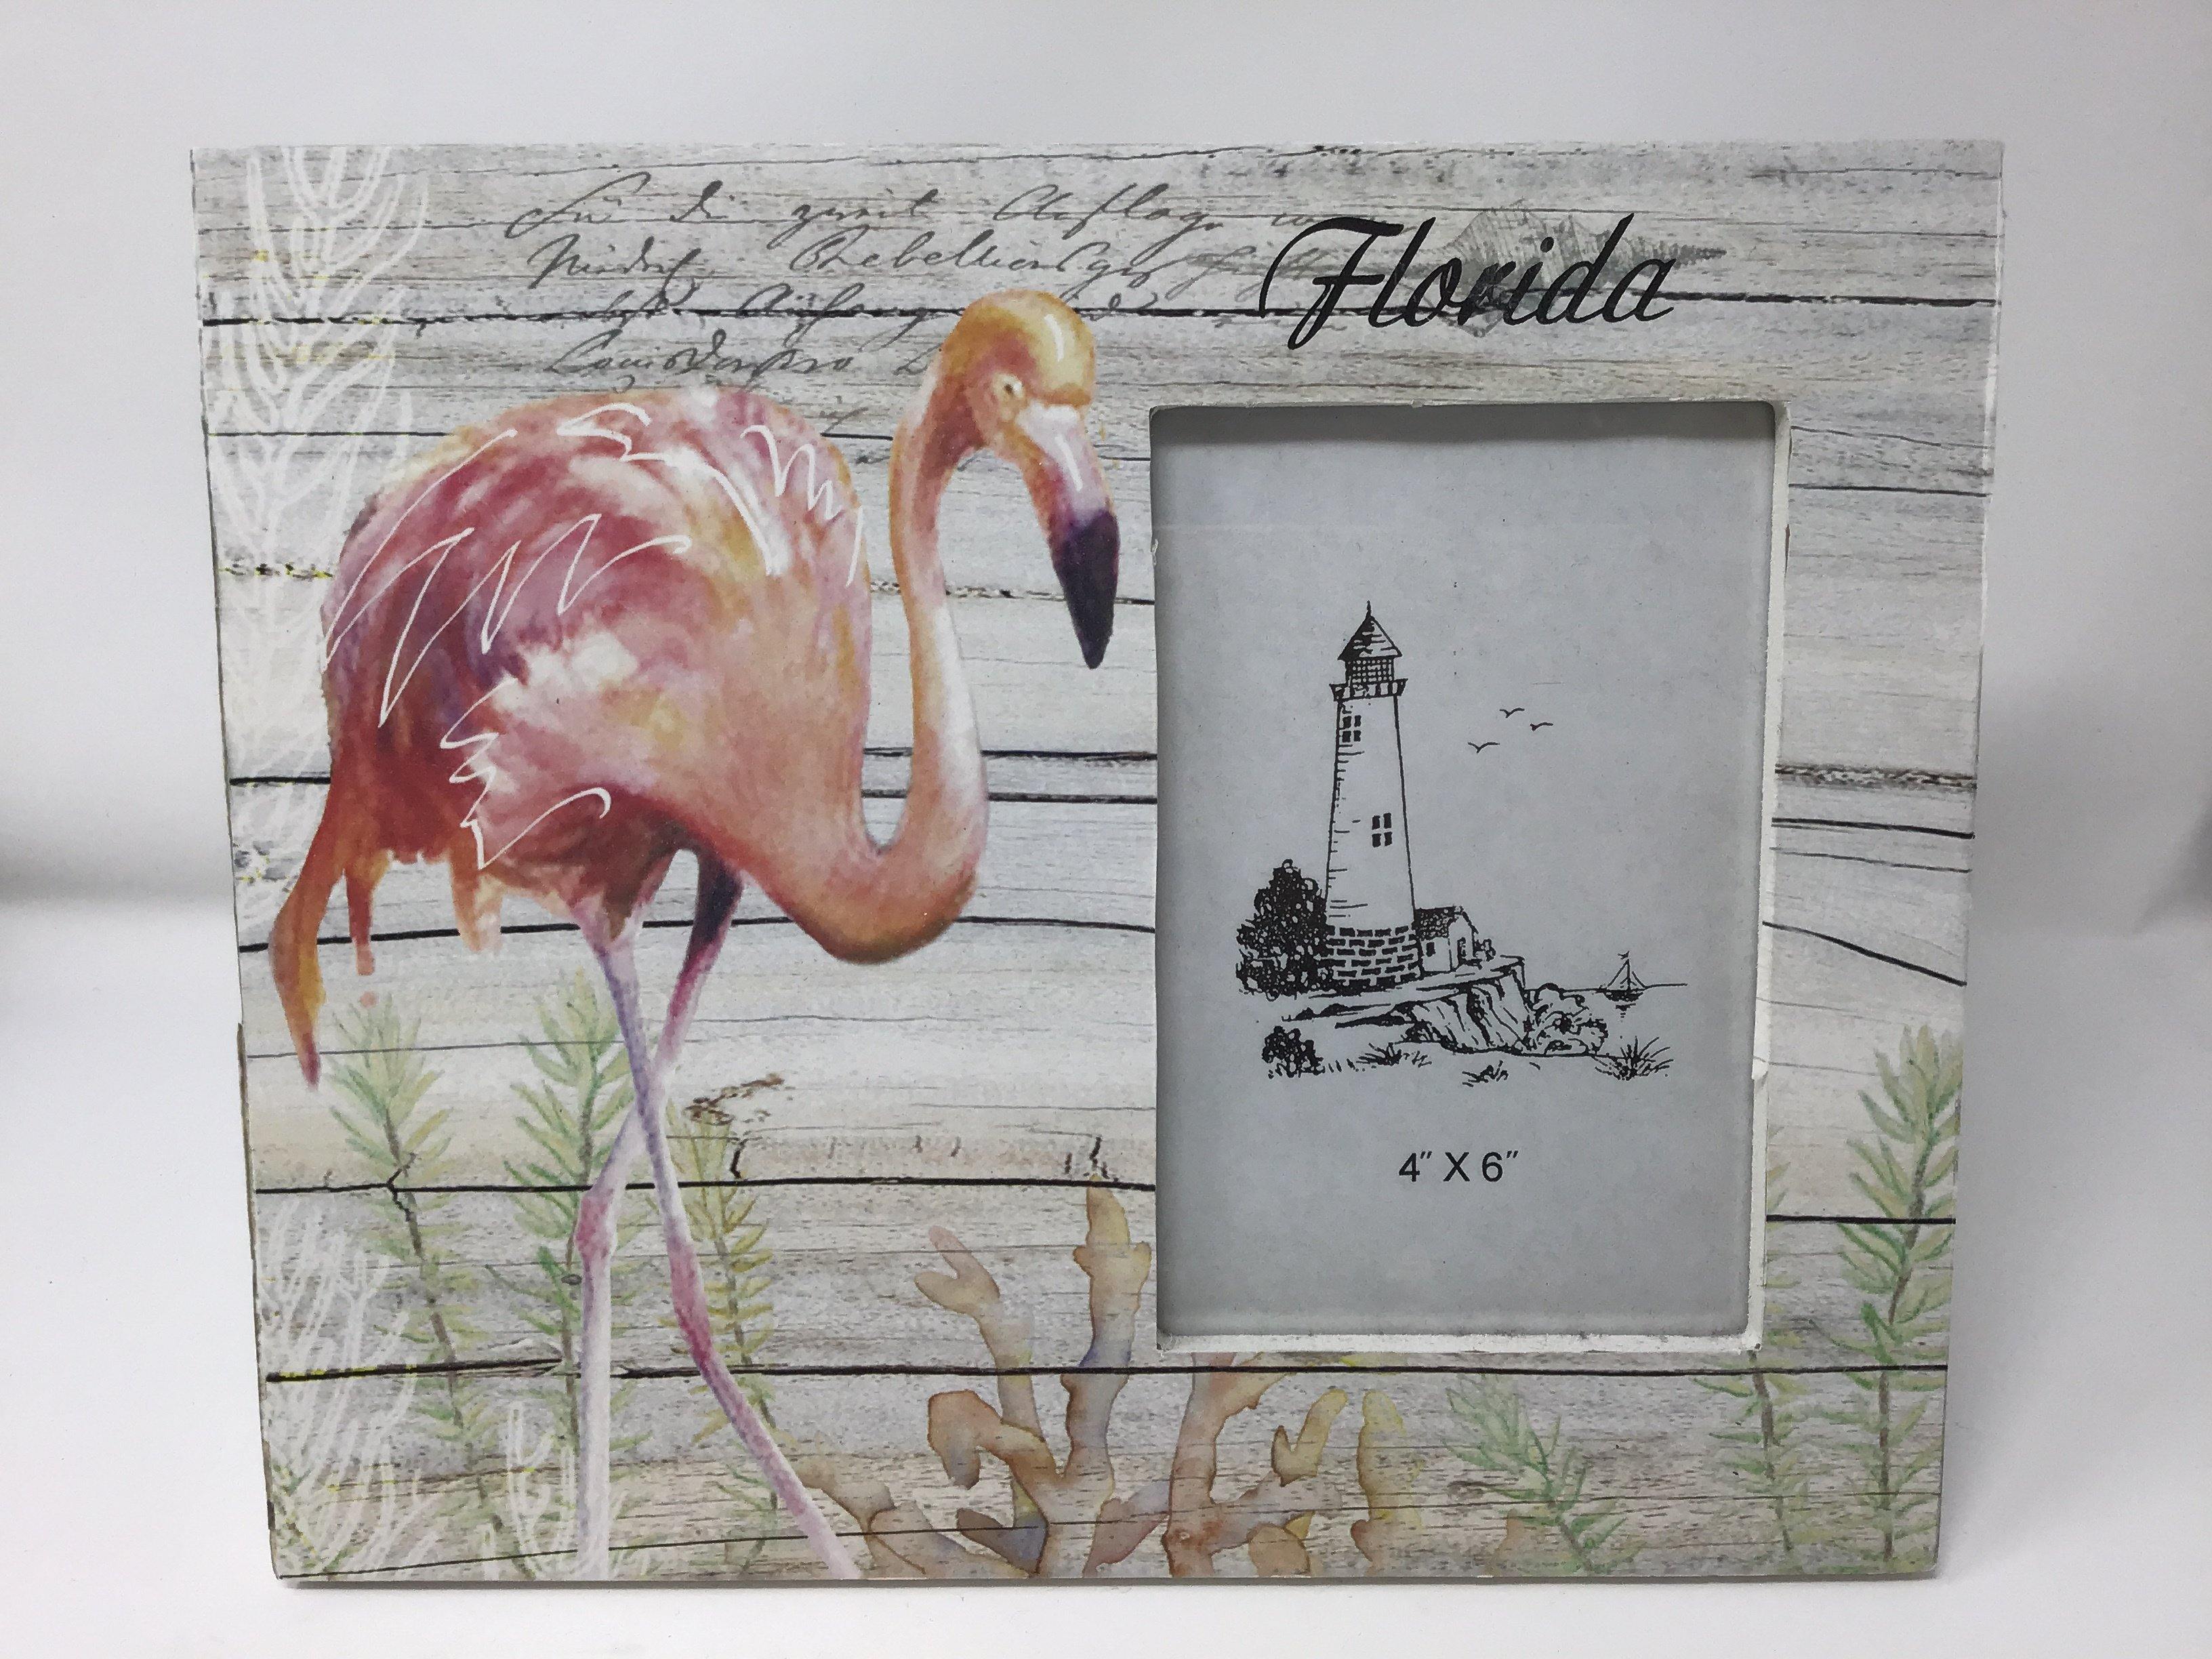 Flamingo Florida Photo Frame 4X6"